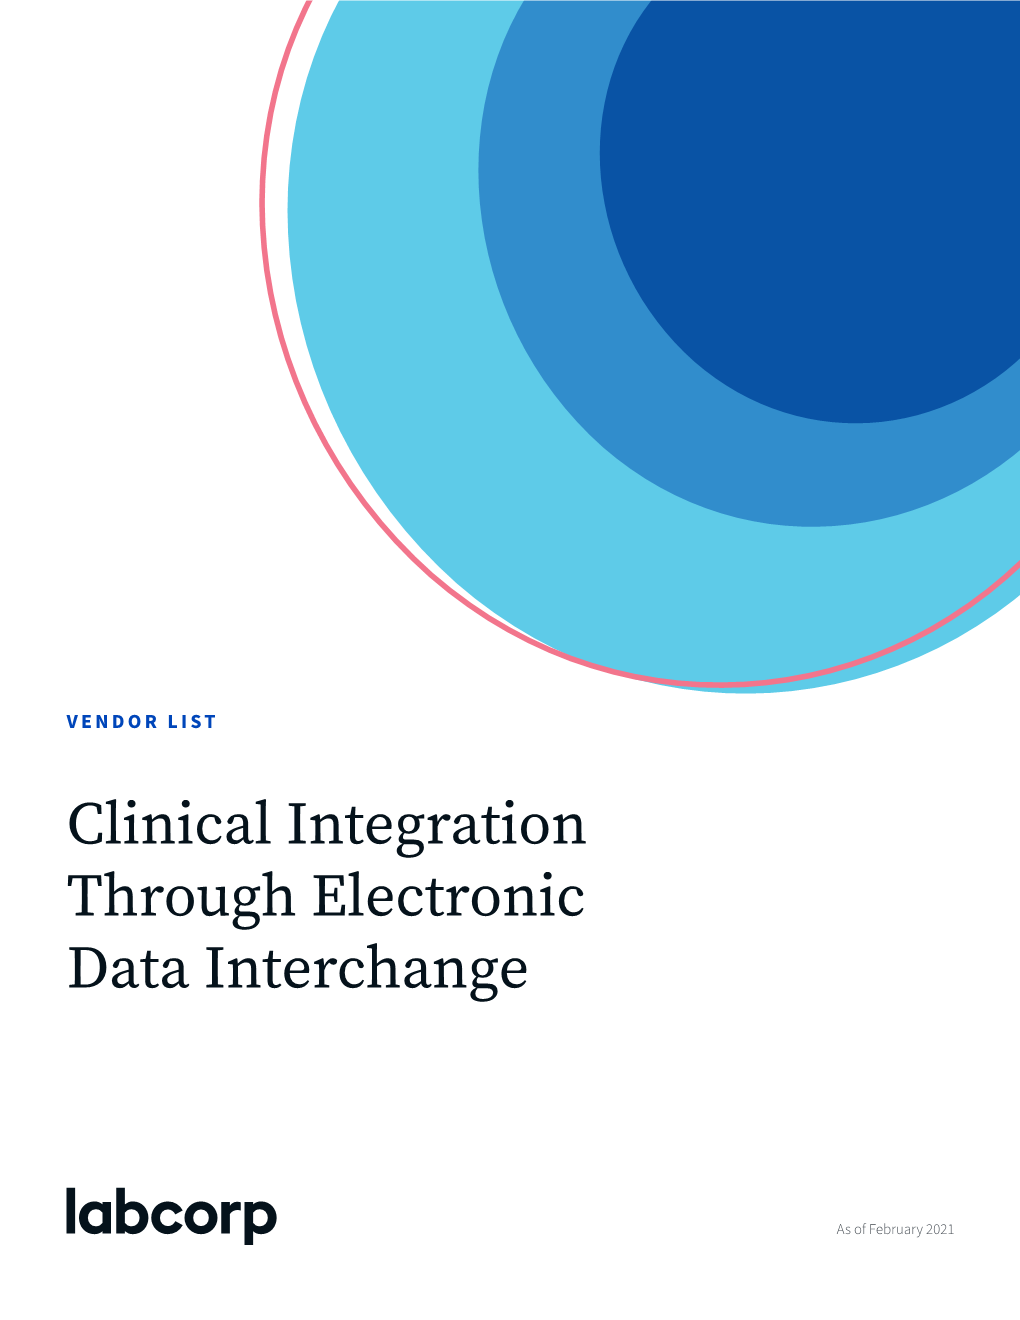 Clinical Integration Through Electronic Data Interchange